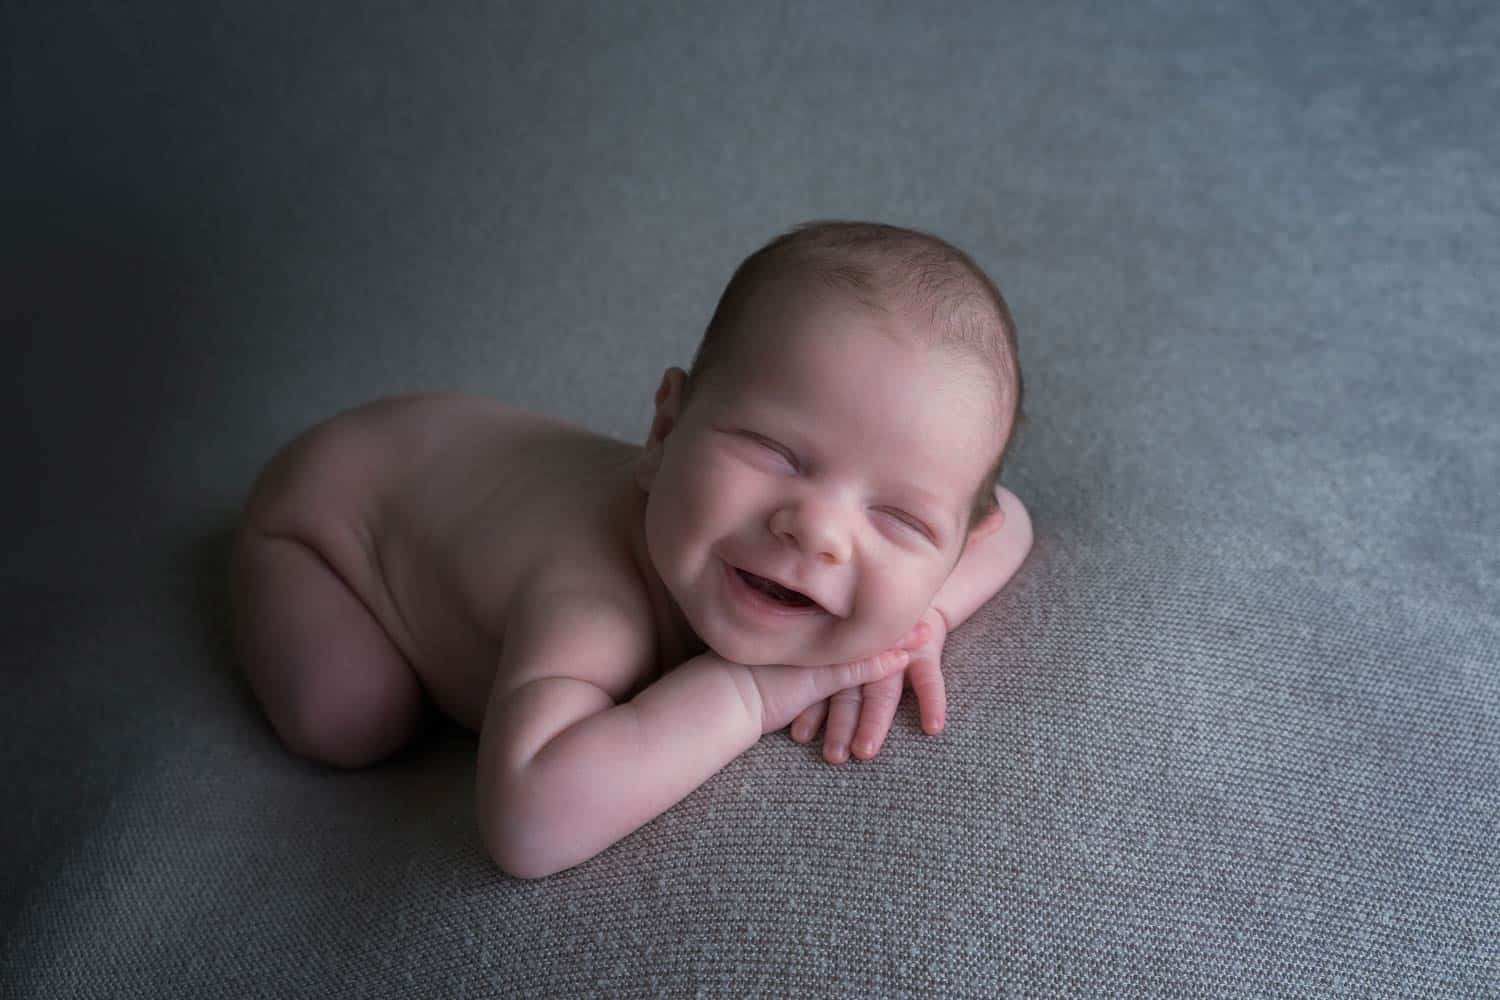 newborn baby smiling during session in Edinburgh photo studio